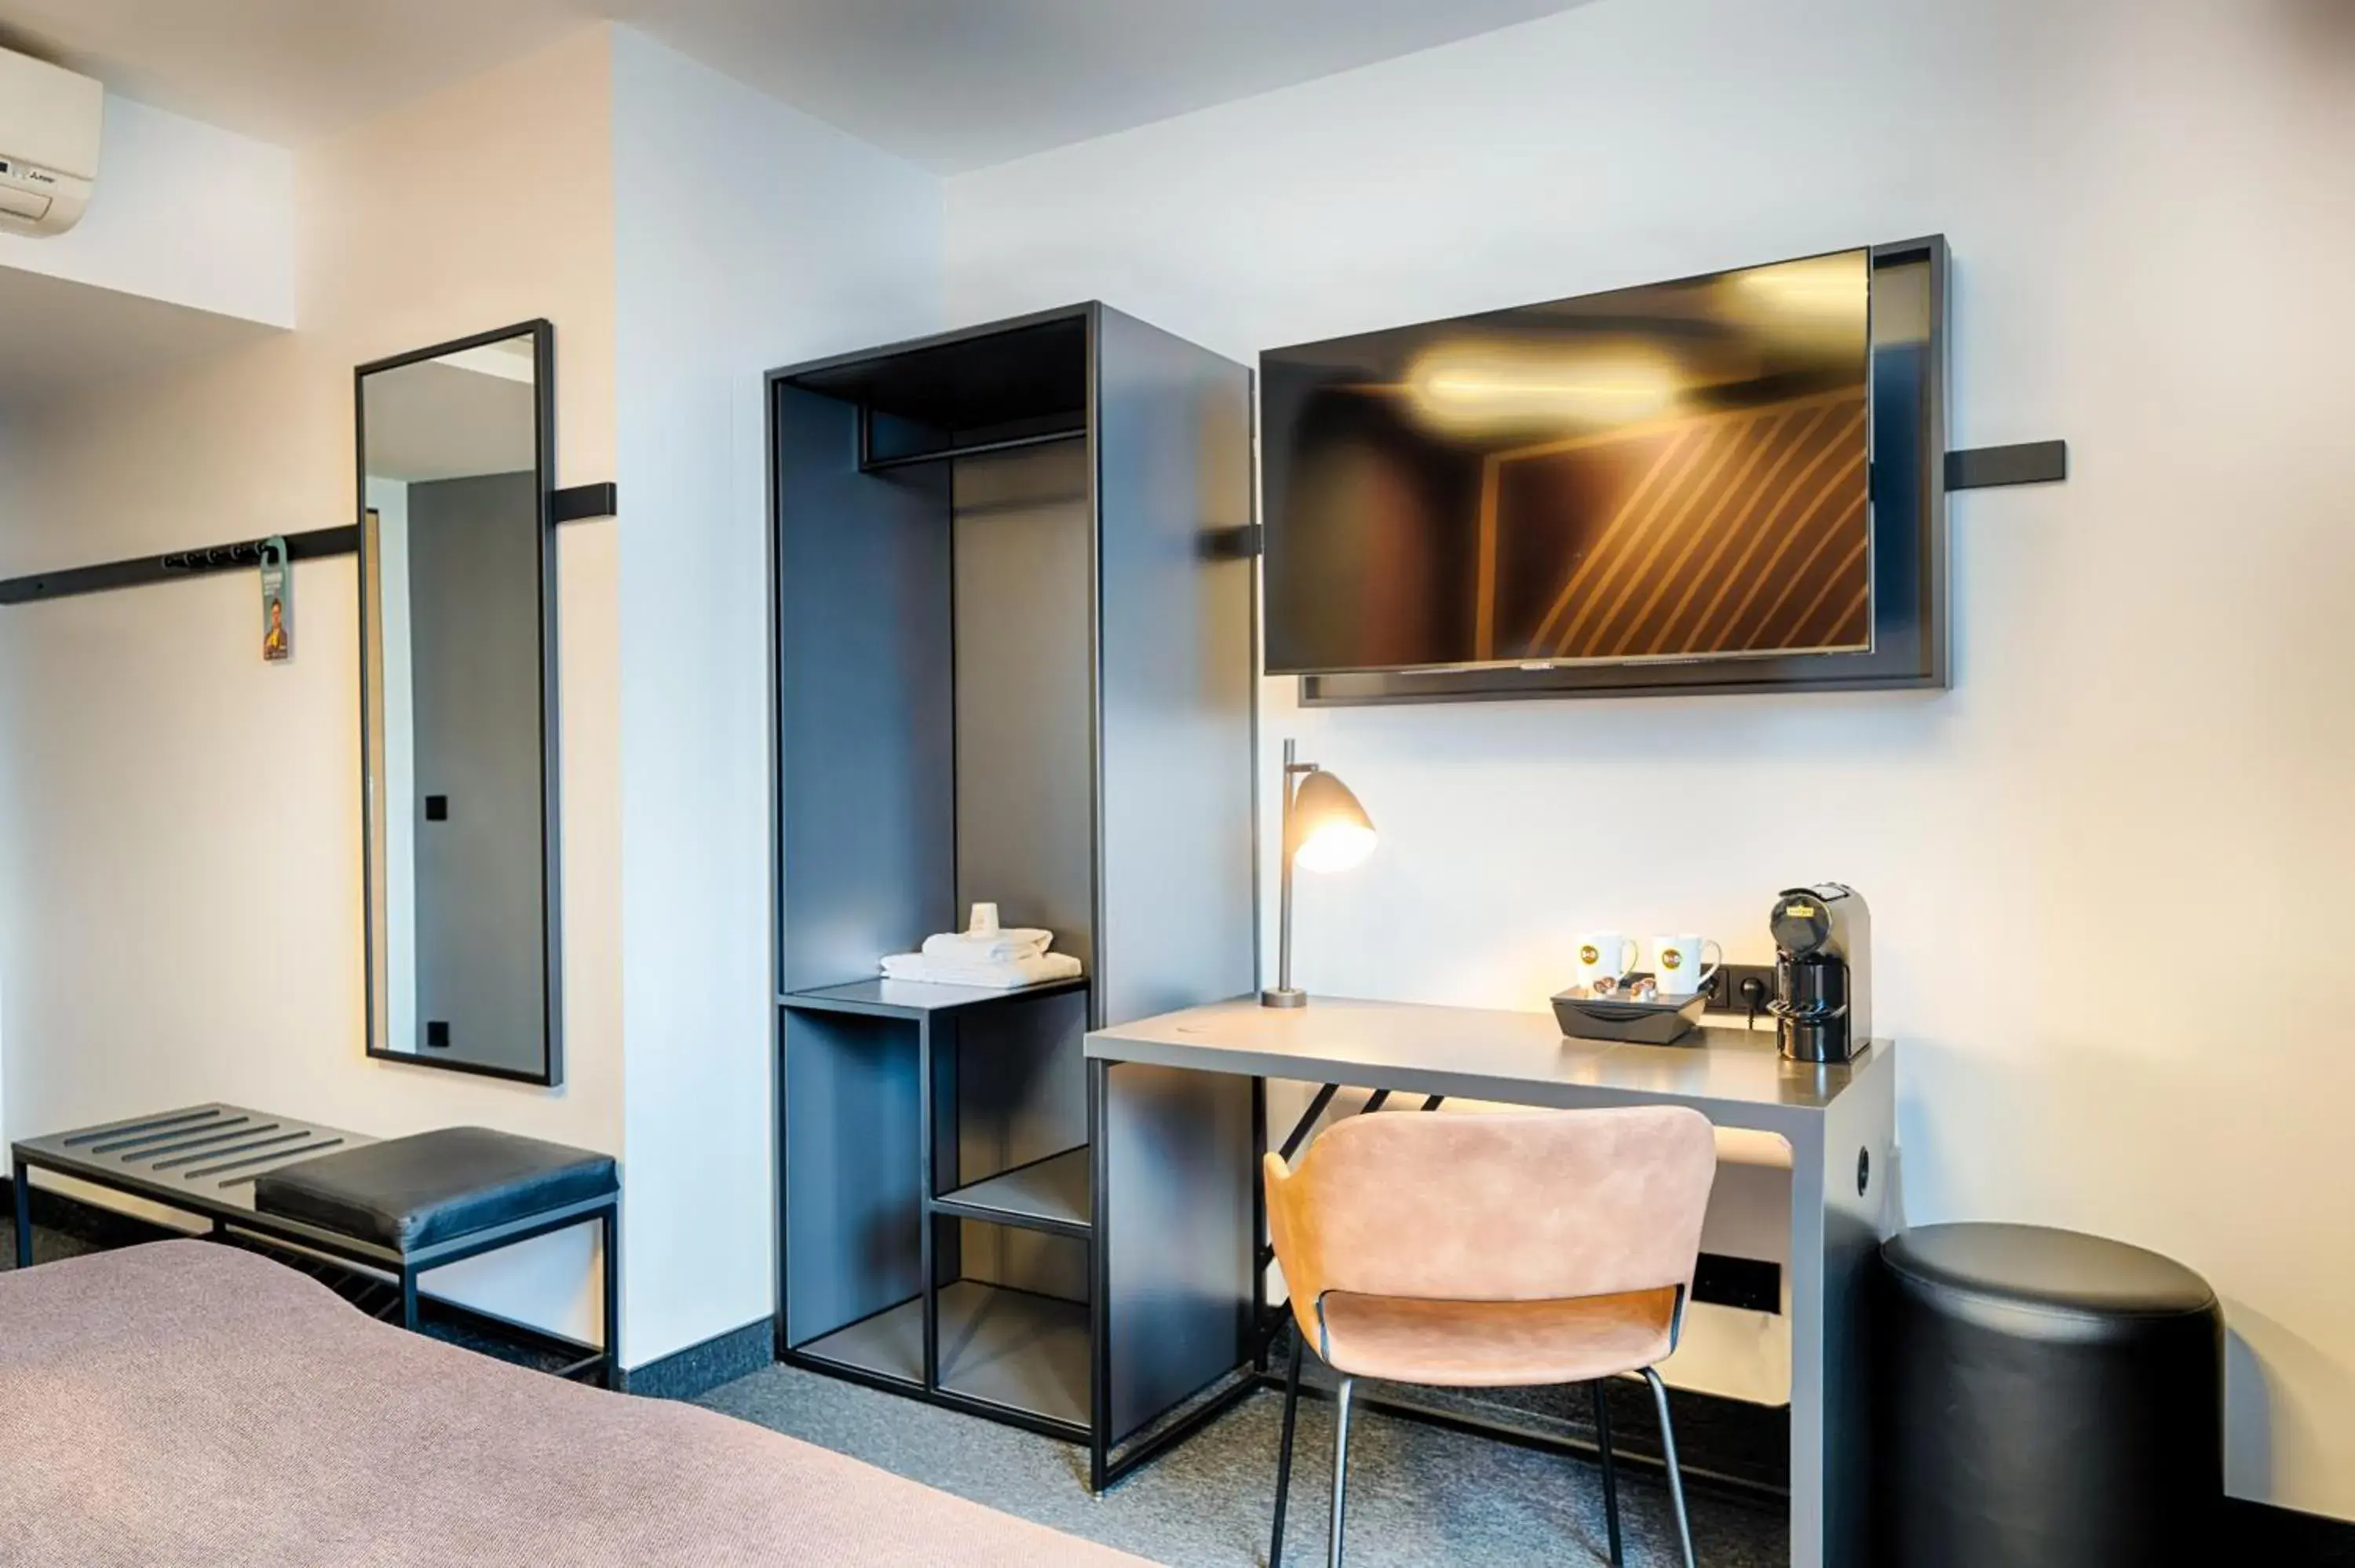 Photo of the whole room, Bathroom in B&B Hotel Bonn